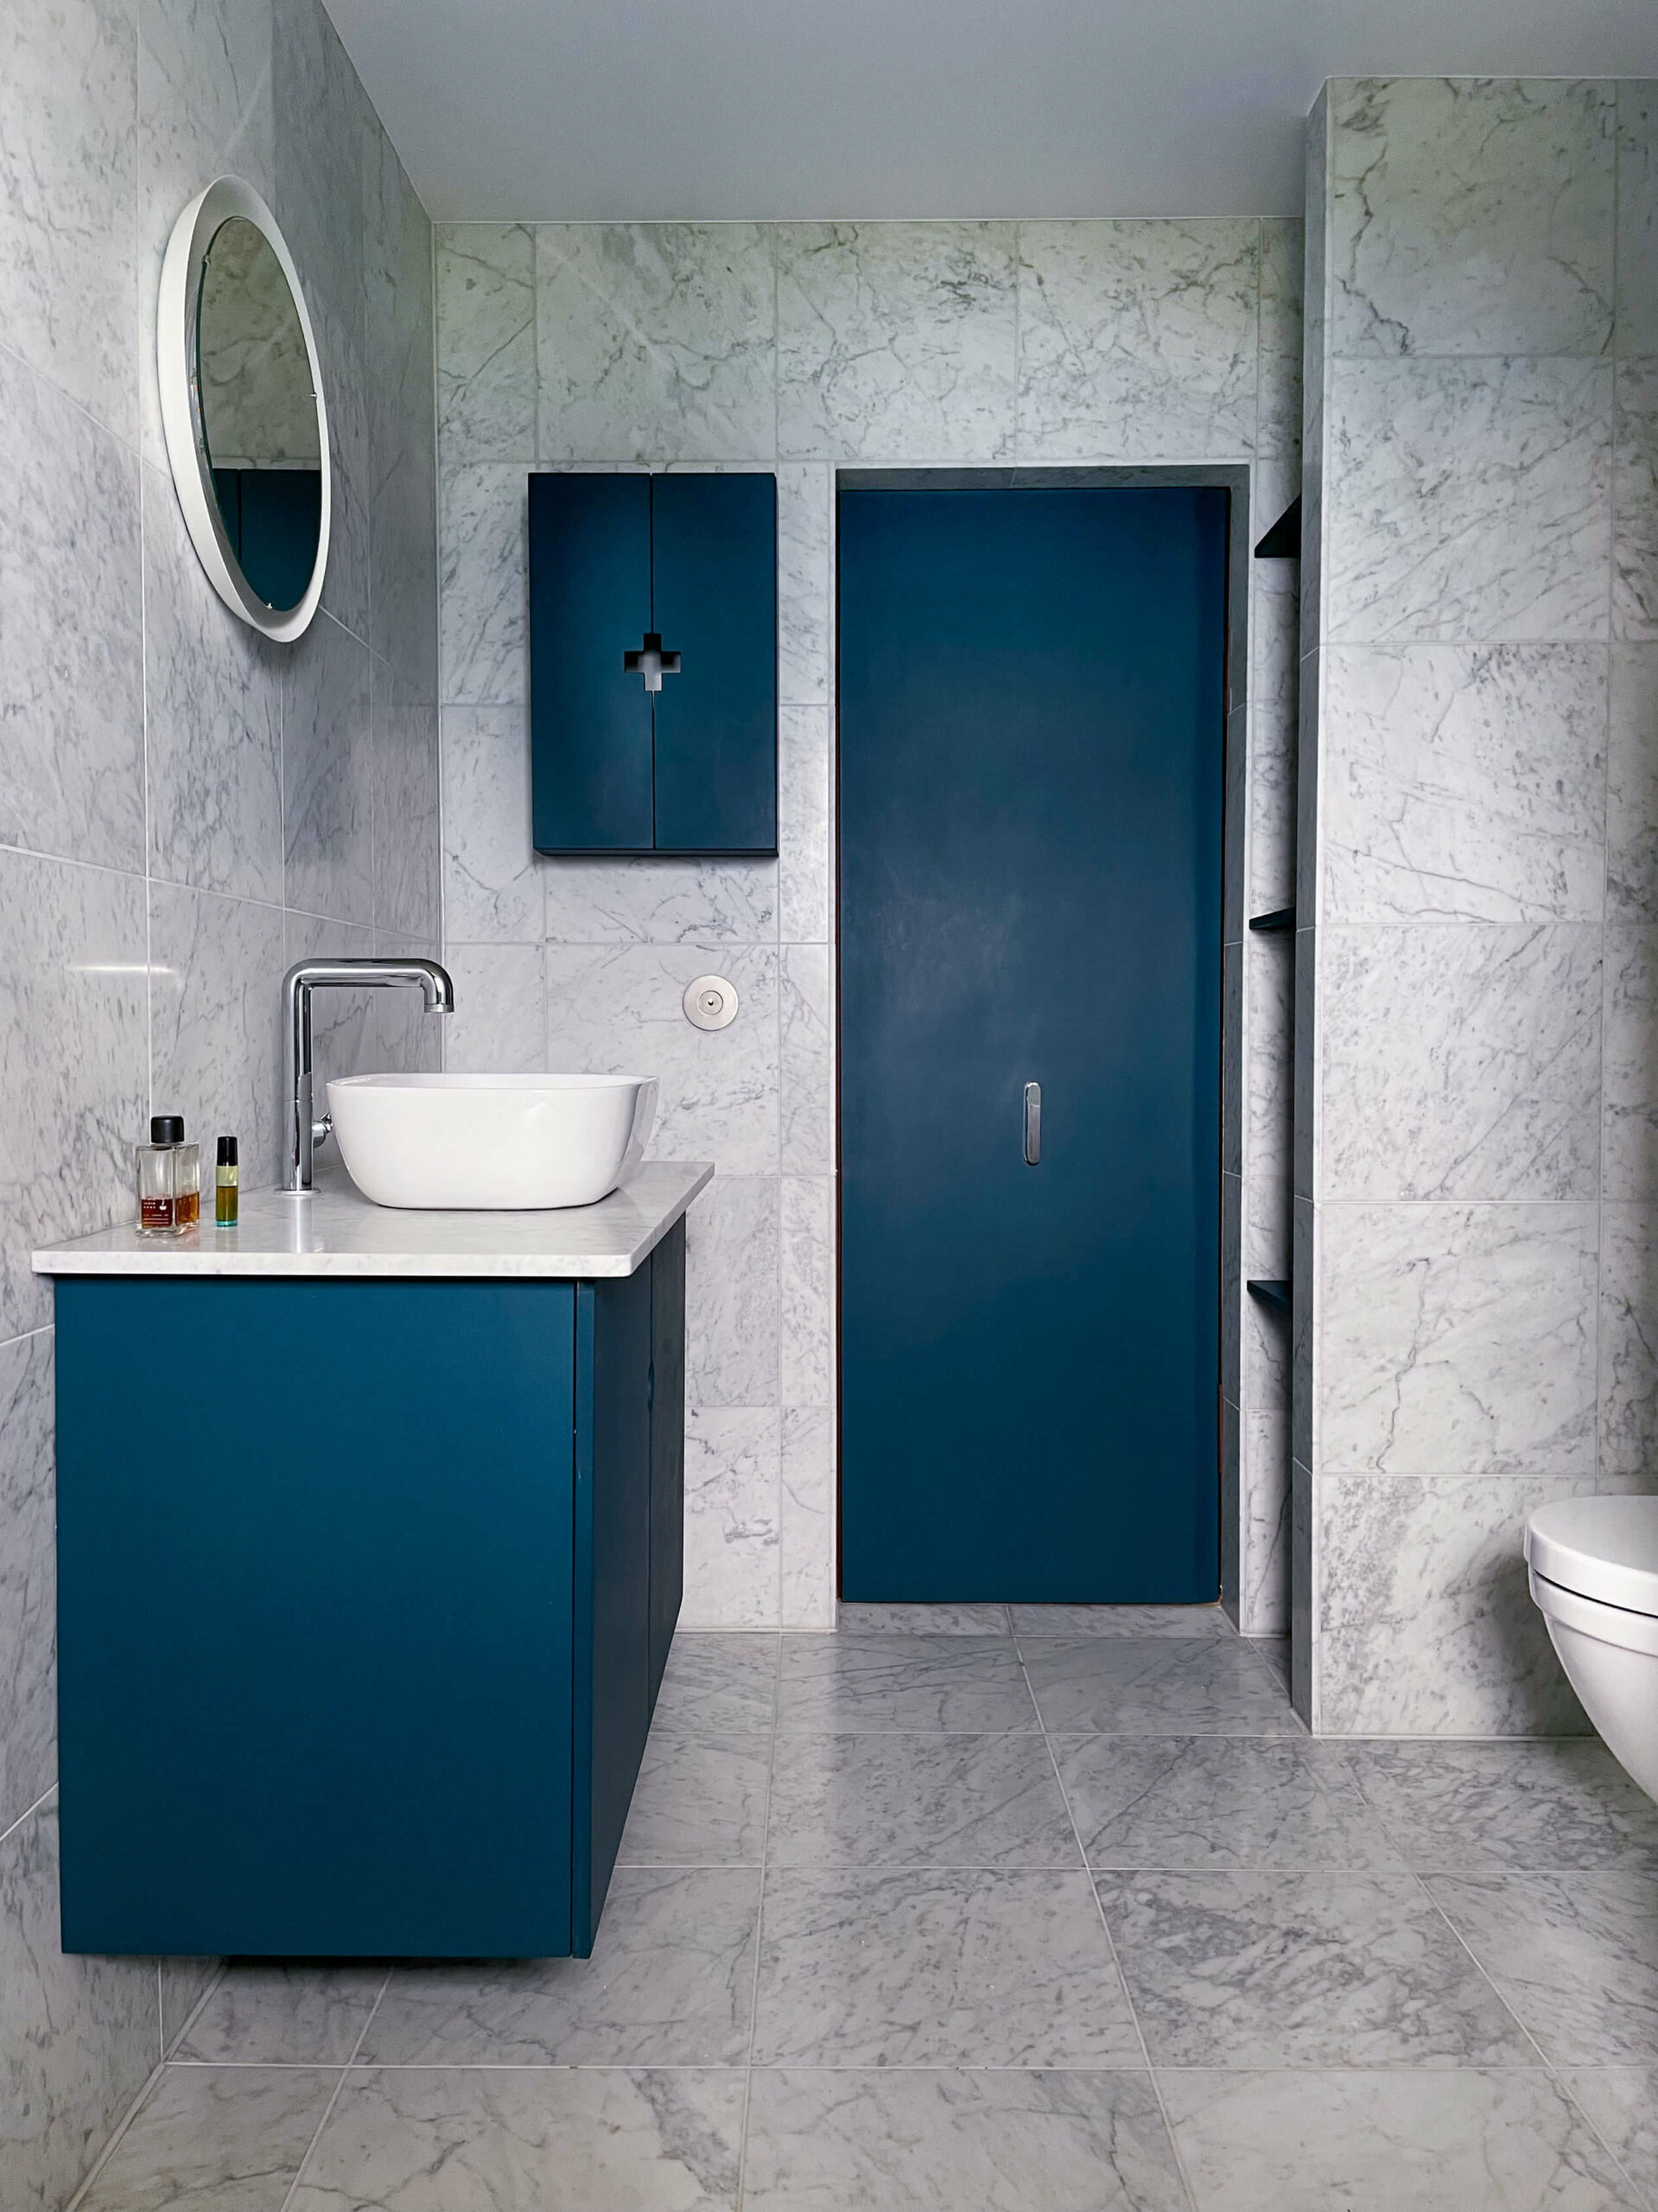 AUTHOS architecture renovation apartment bathroom carrara scaled